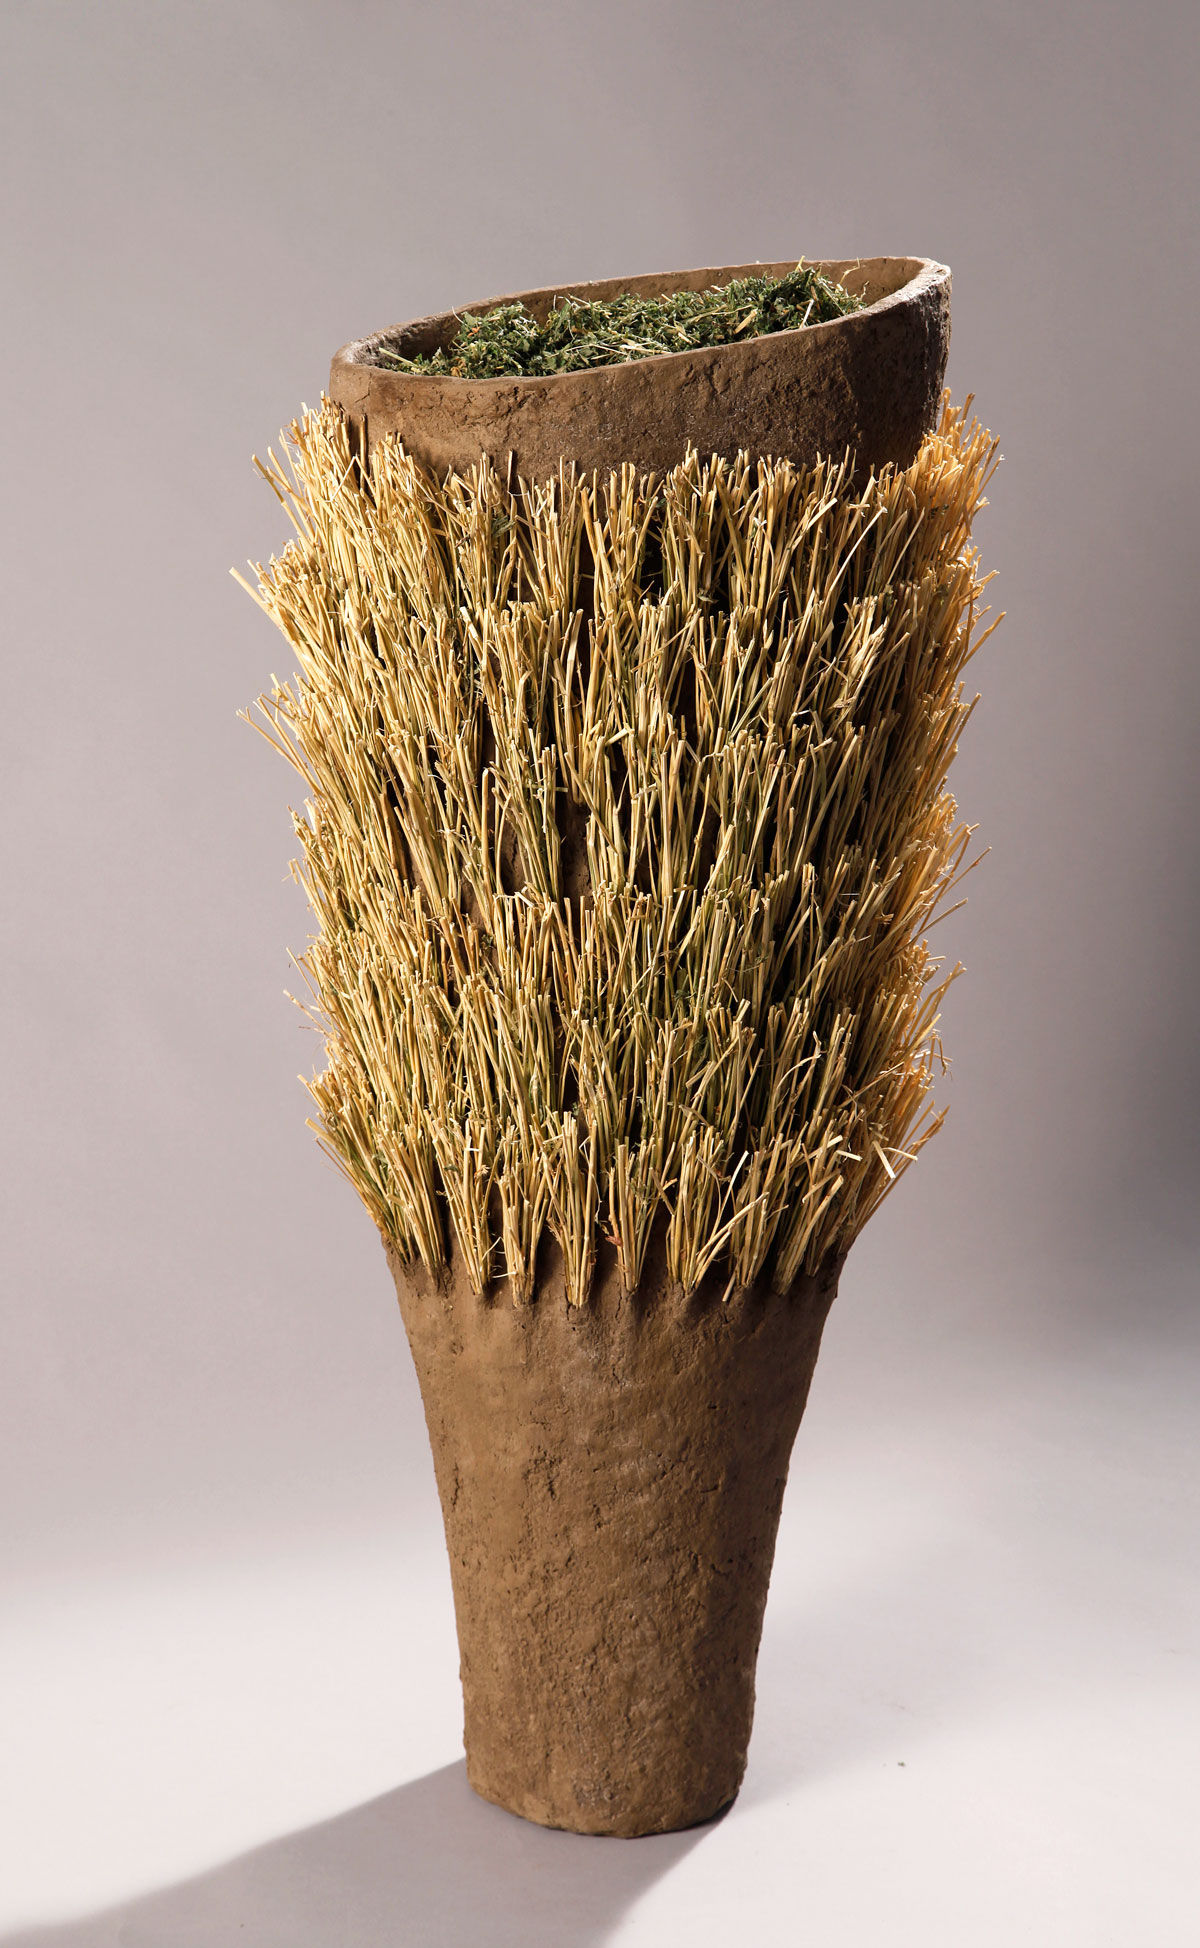 Vase of Alfalfa For the Trinity River